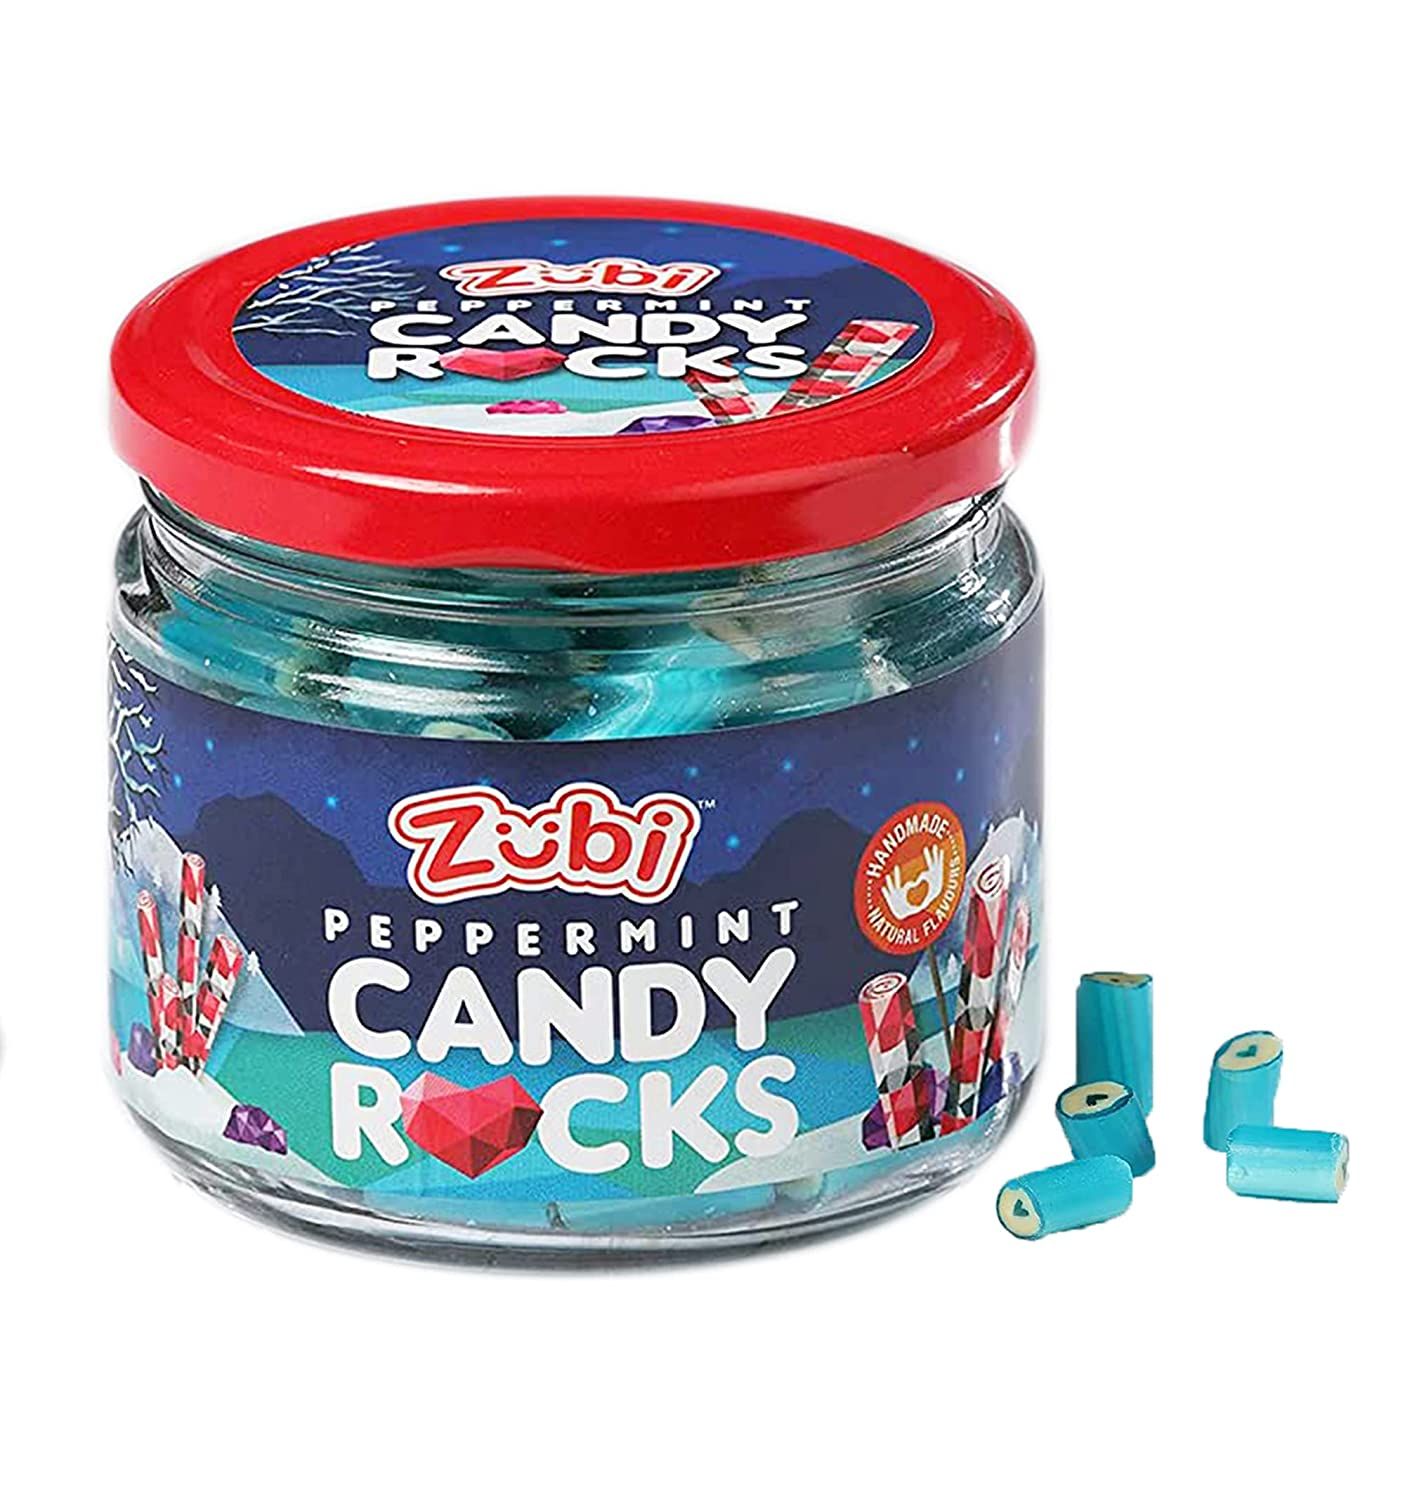 Zubi Pepper Mints Rocks Hard Candies Image